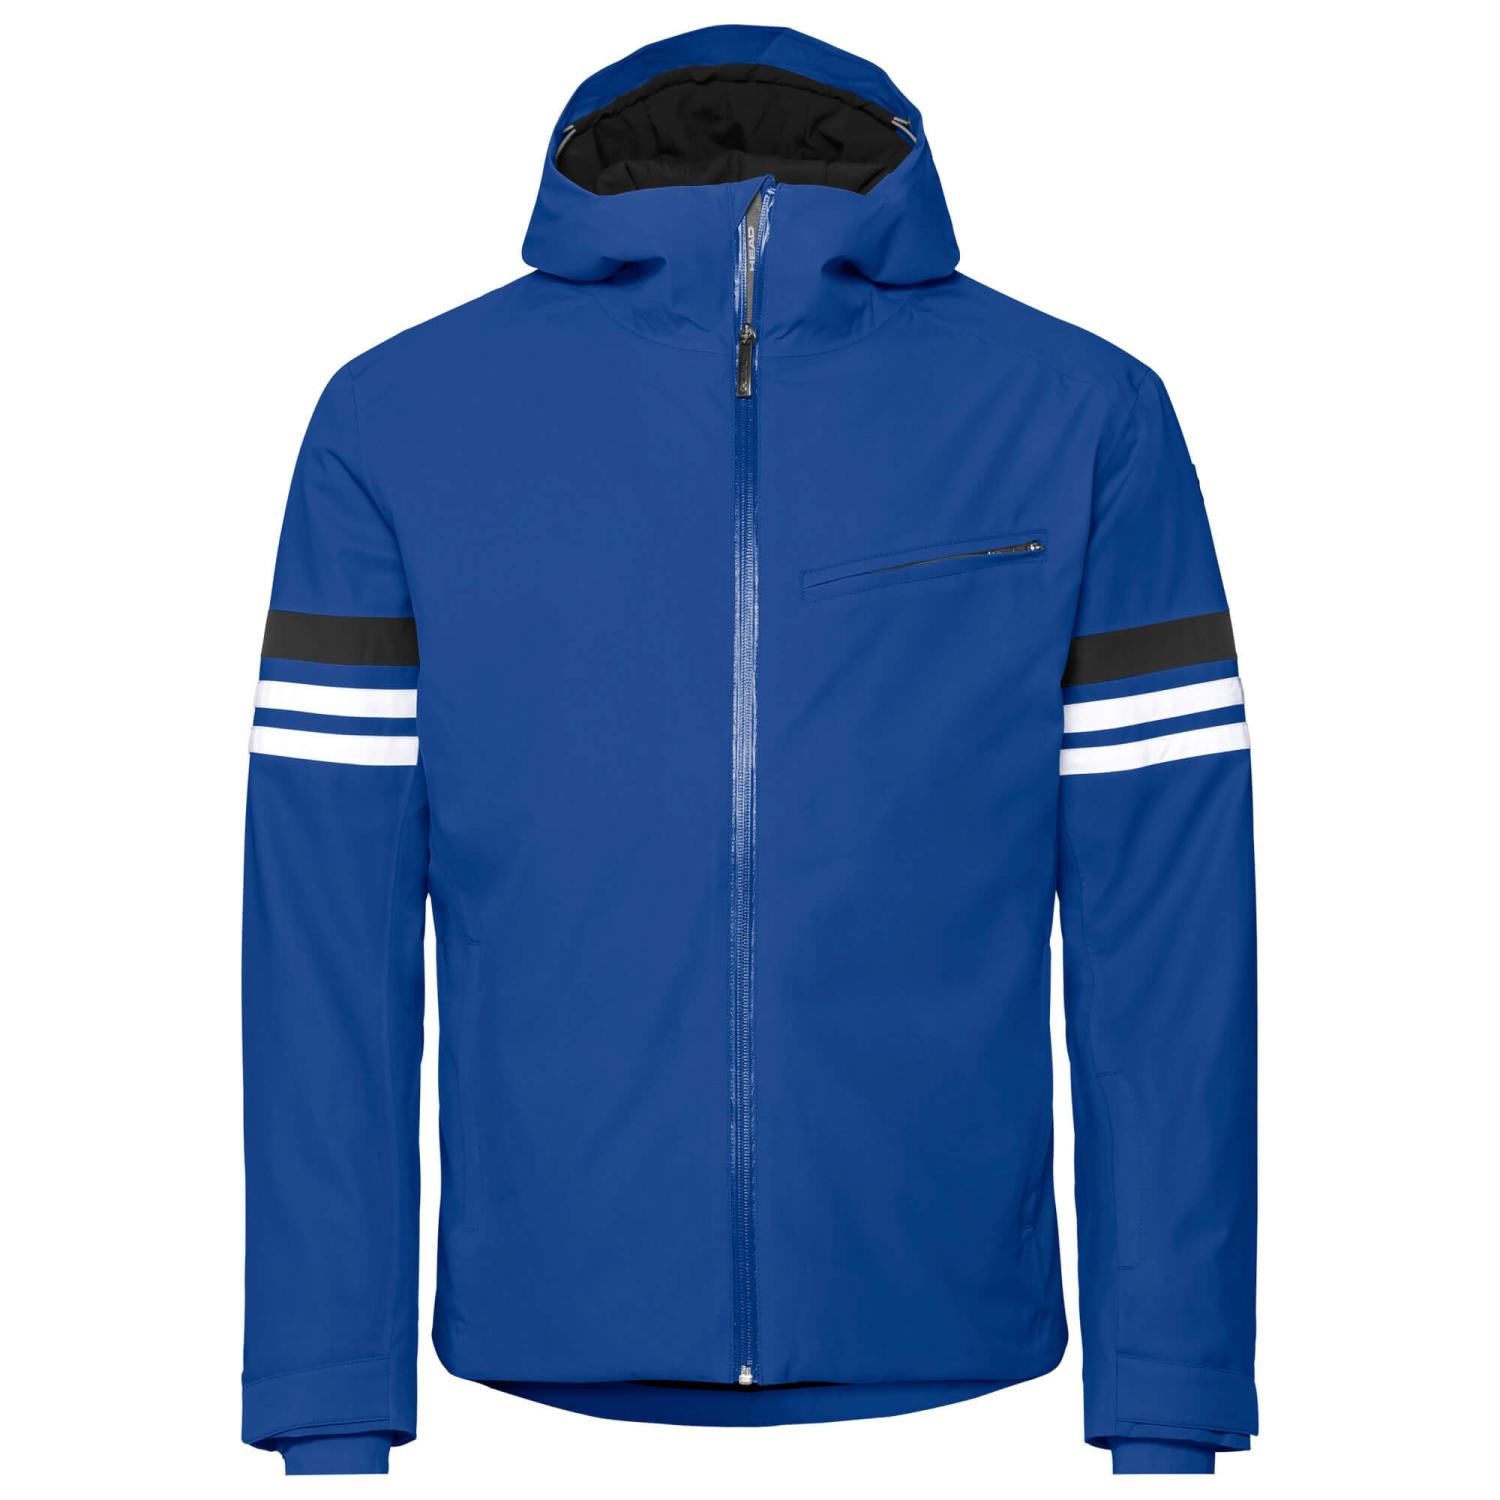 Куртка горнолыжная Head 19-20 Timberline Jacket Rodb, цвет синий, размер XXL 821139 - фото 1